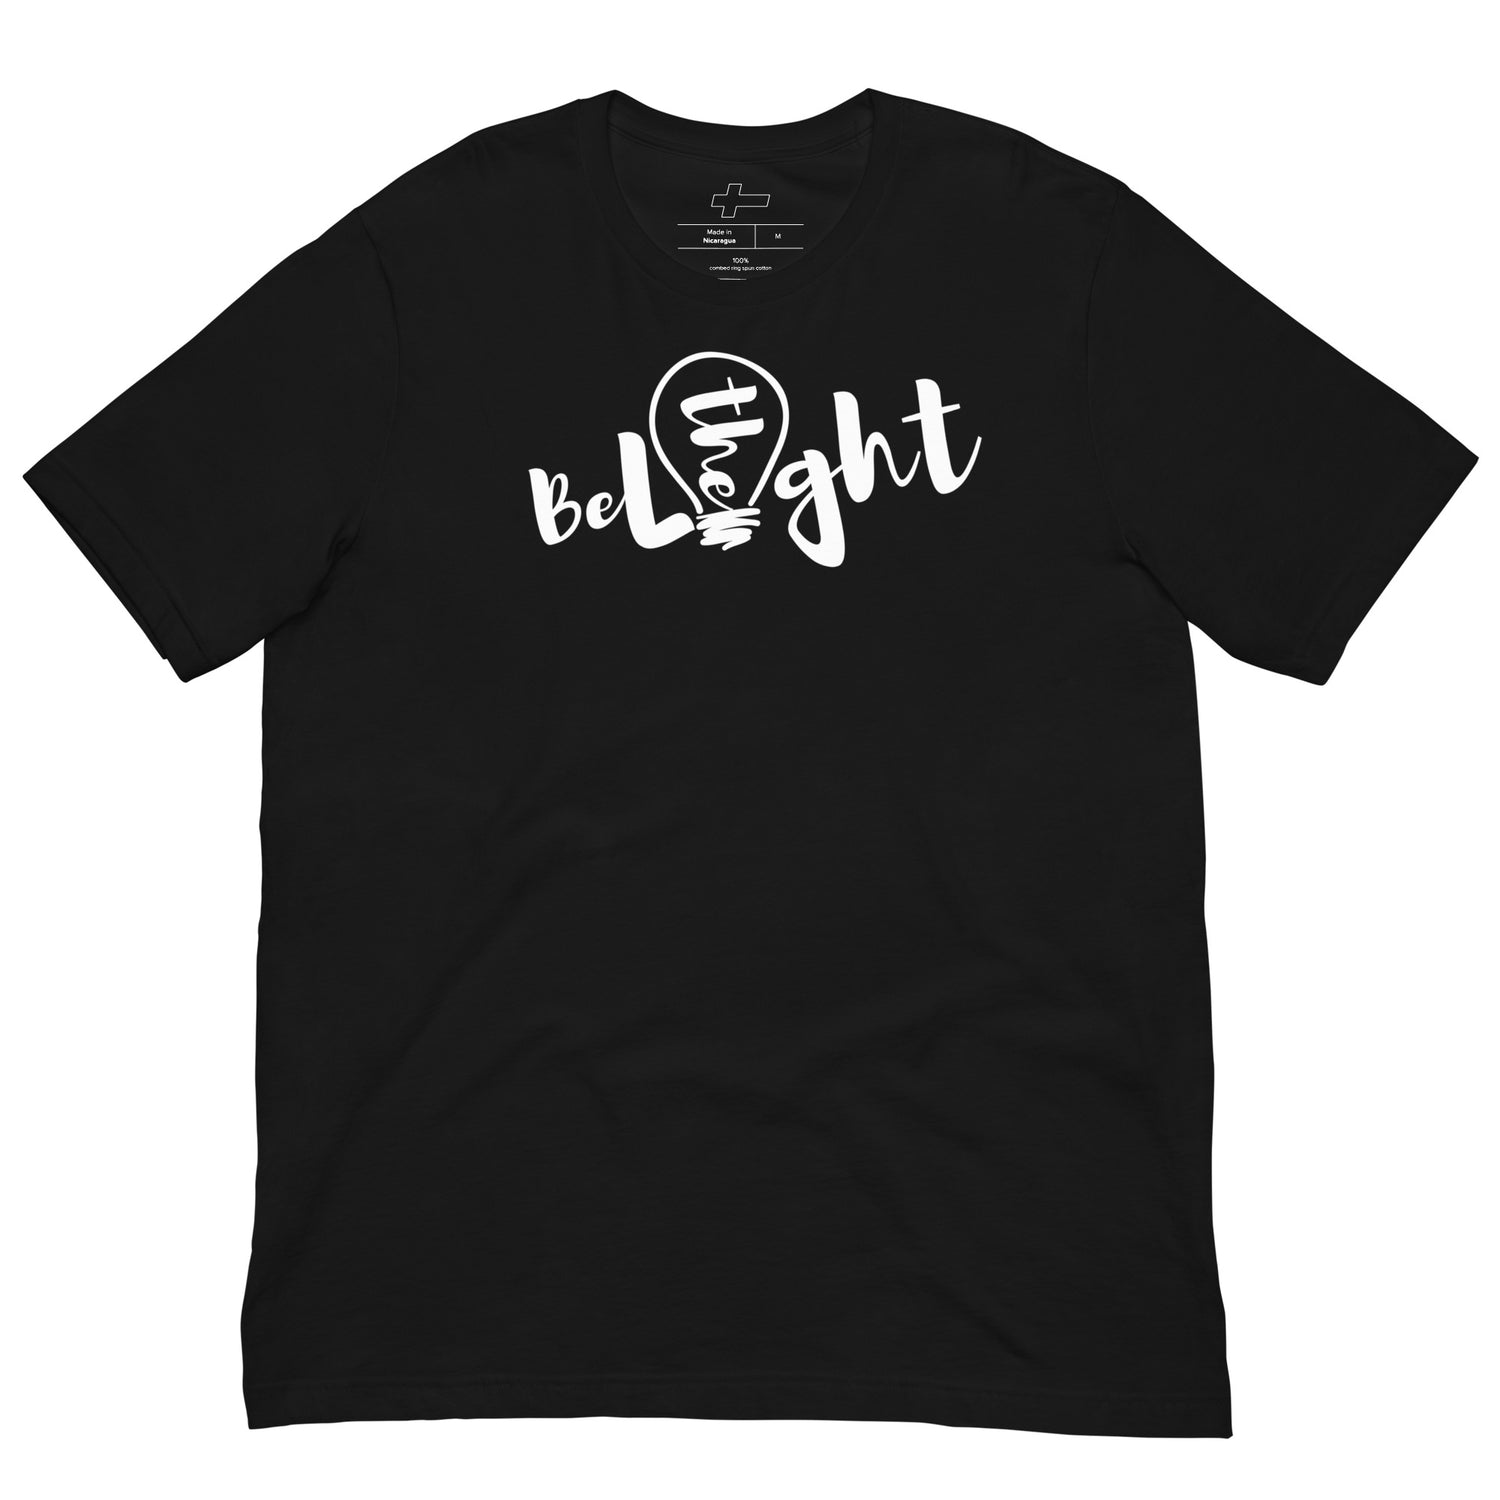 Christian t-shirt for women